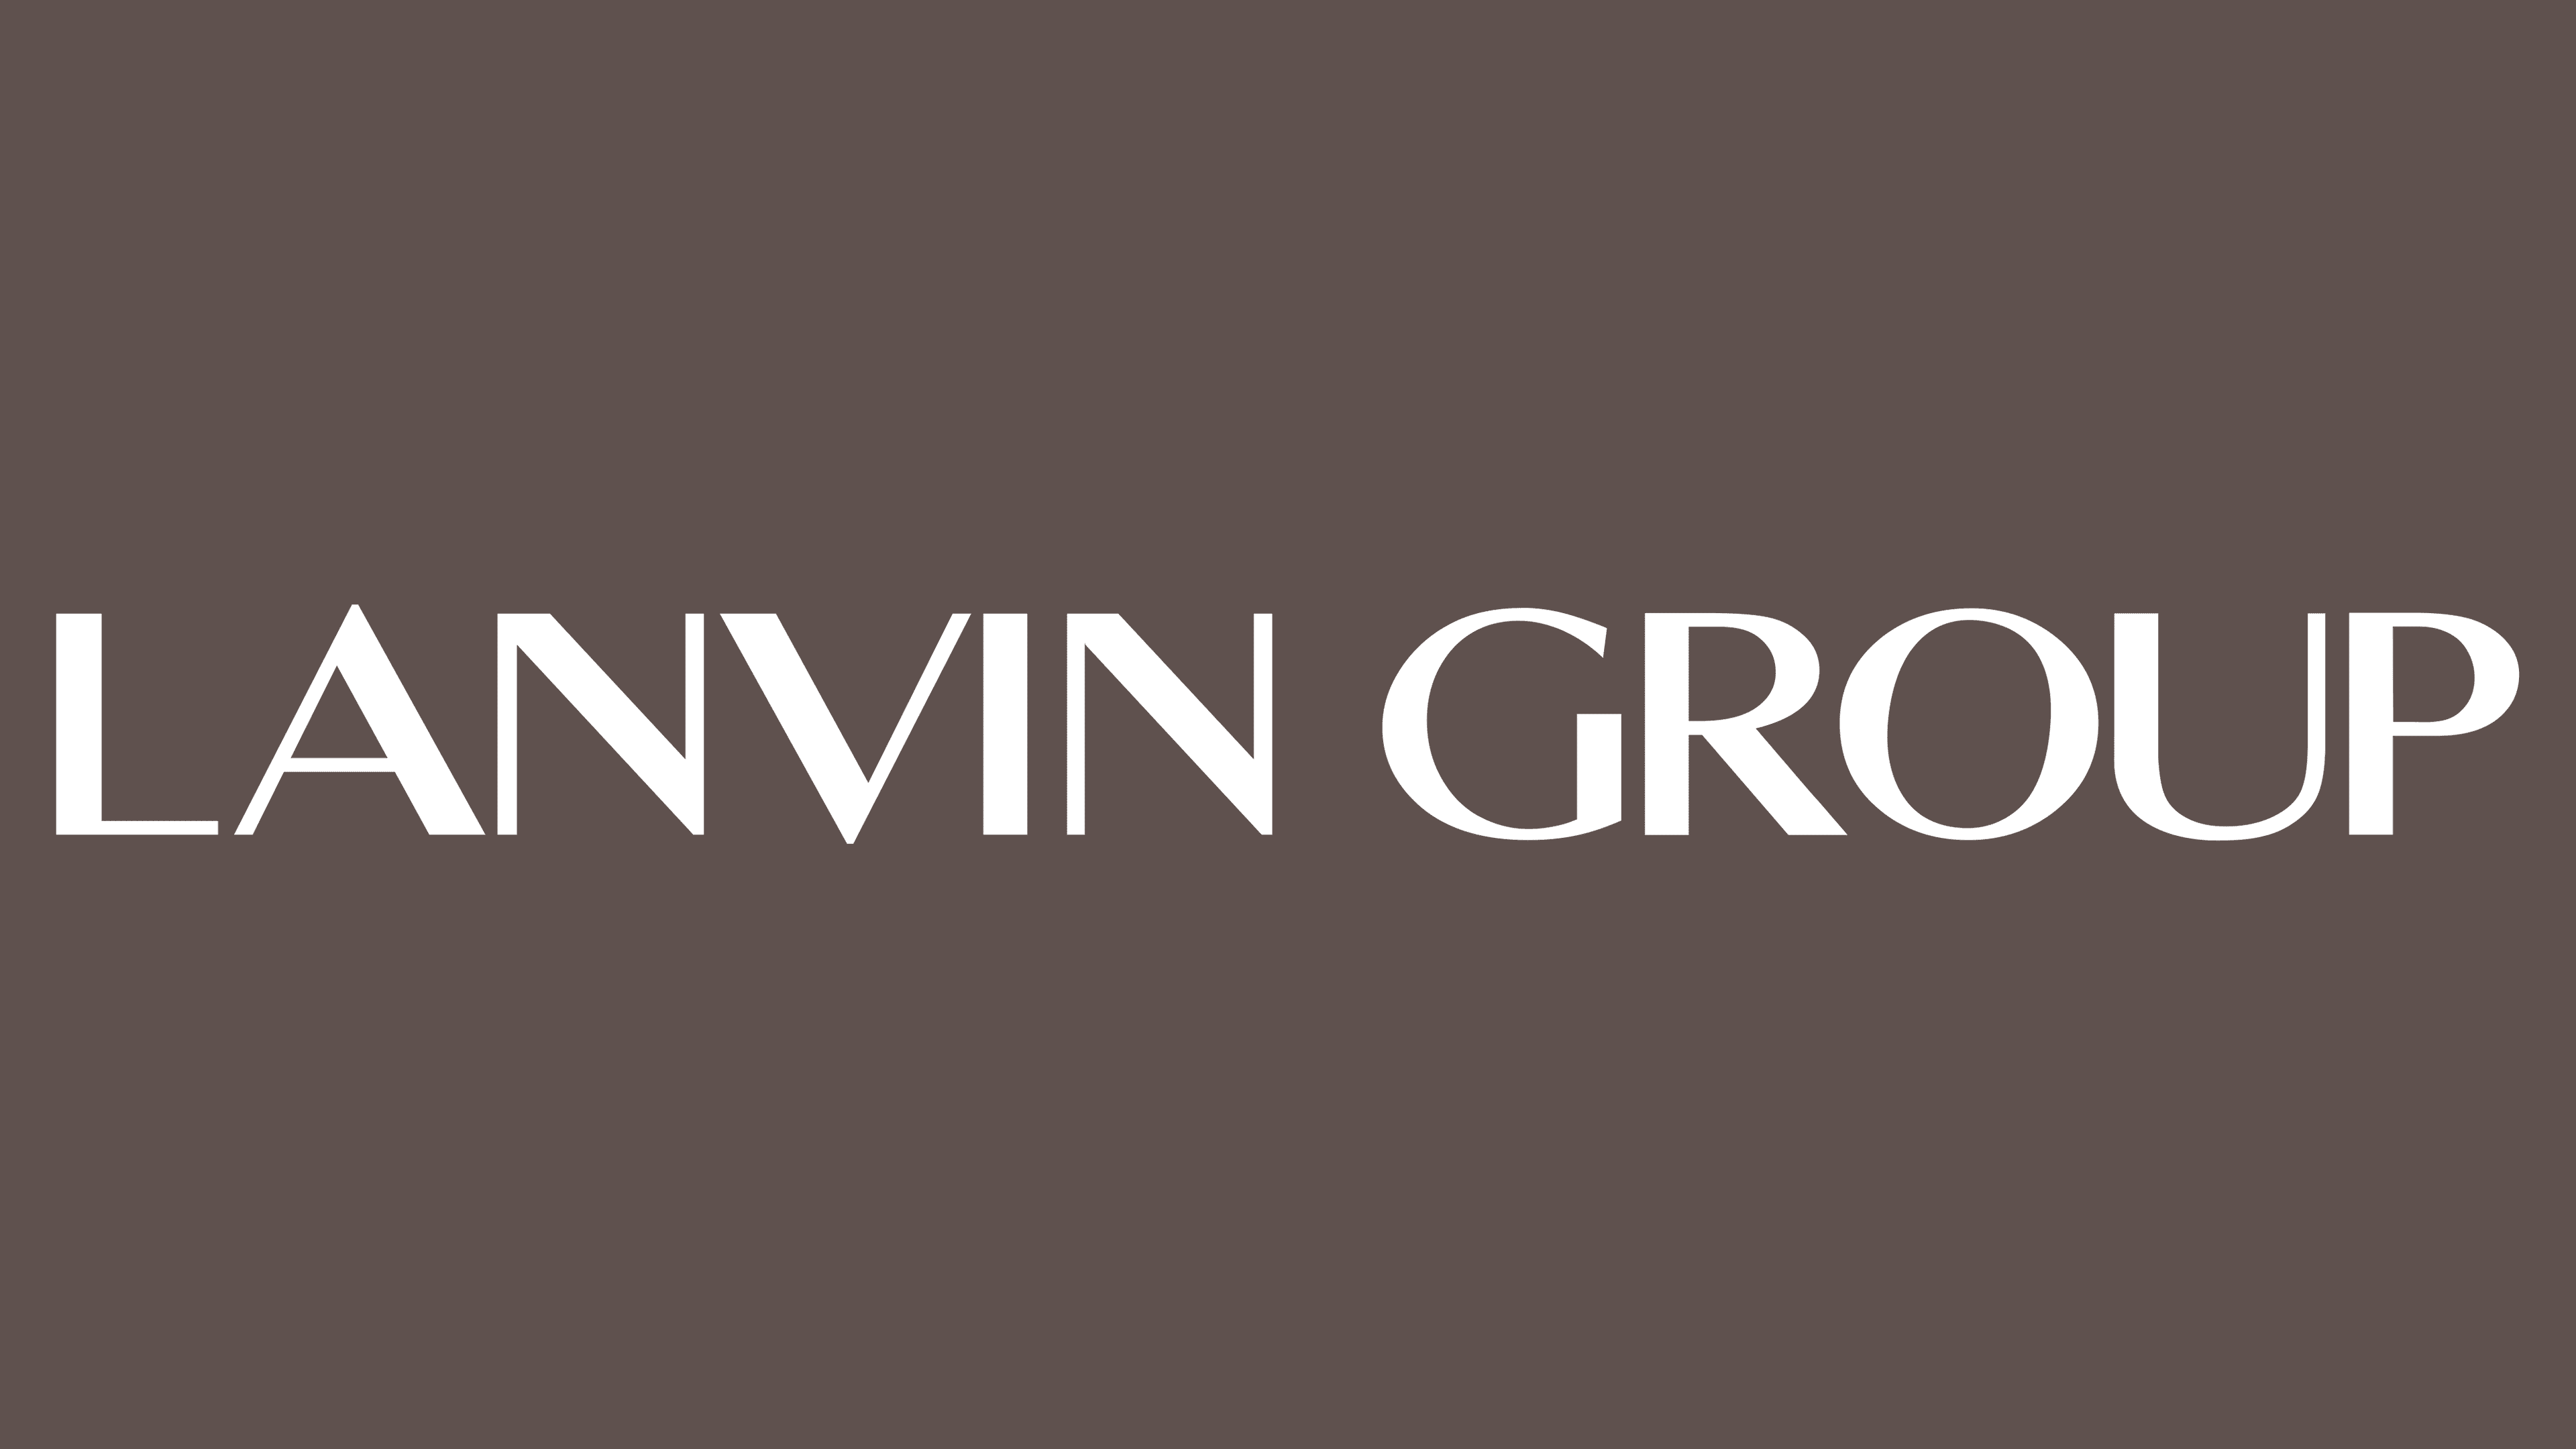 New identity for Shanghai brand Lanvin Group